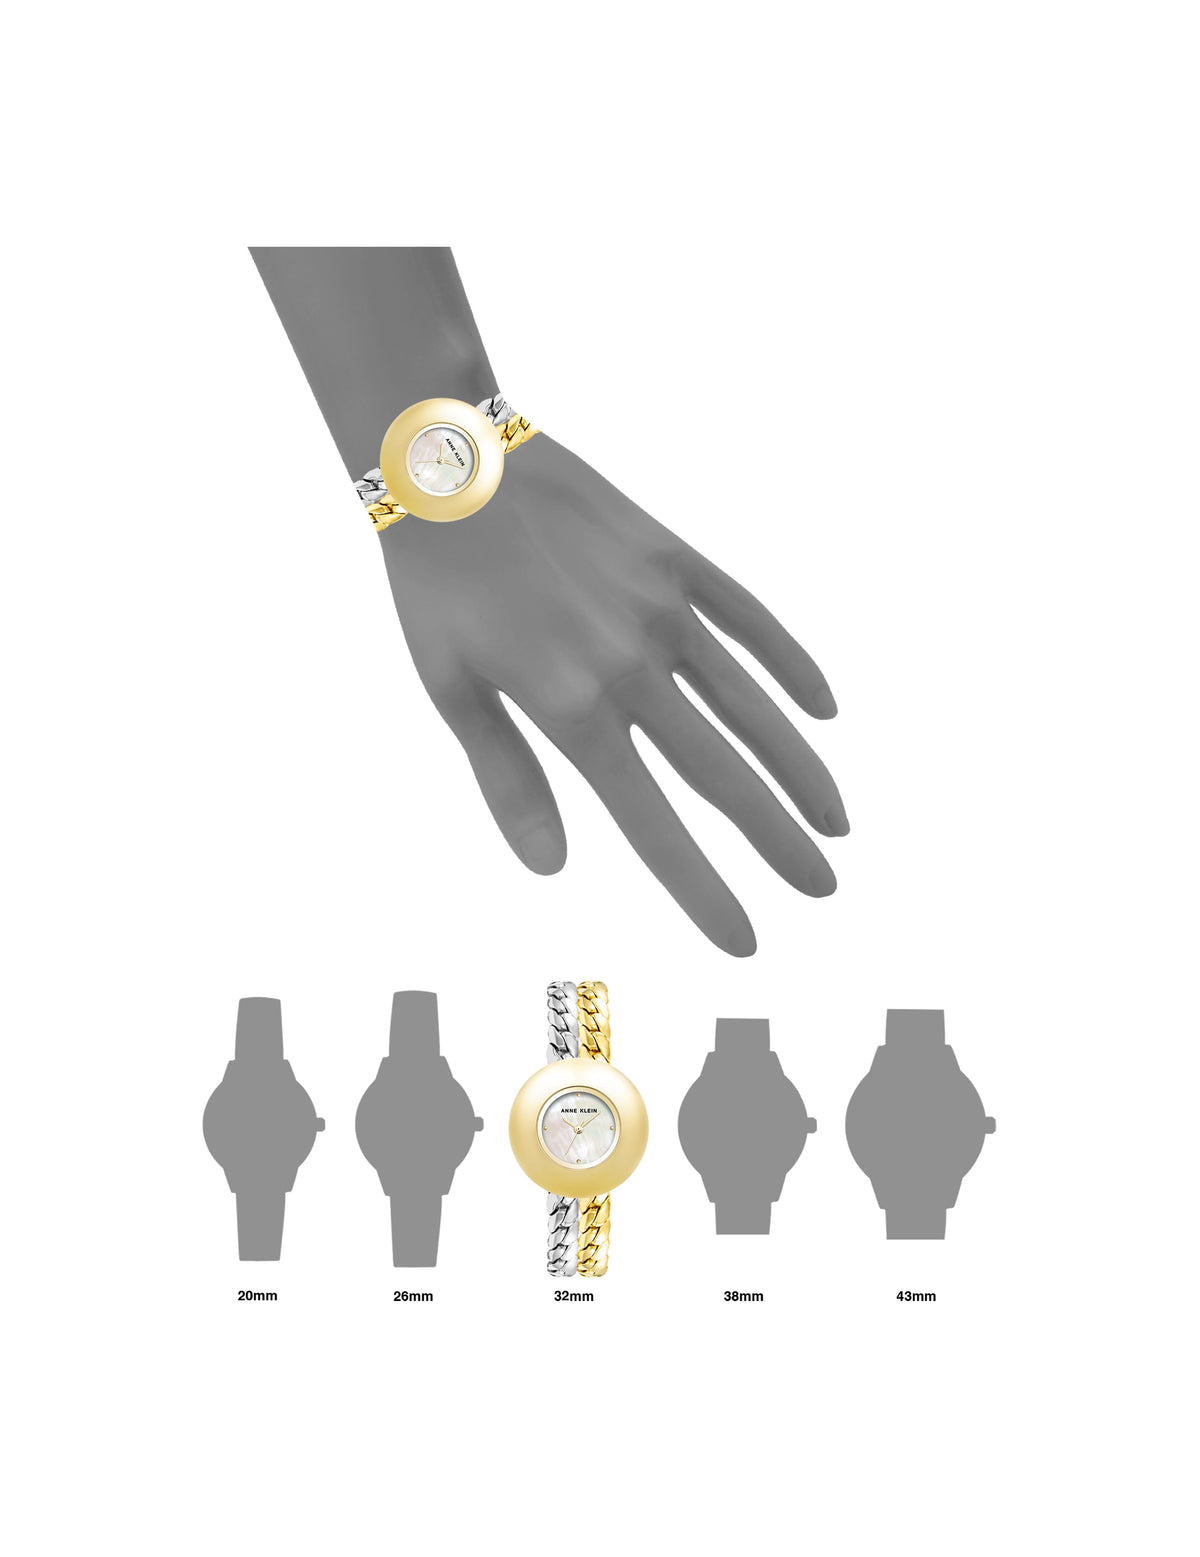 Anne Klein  Double Chain Bracelet Watch